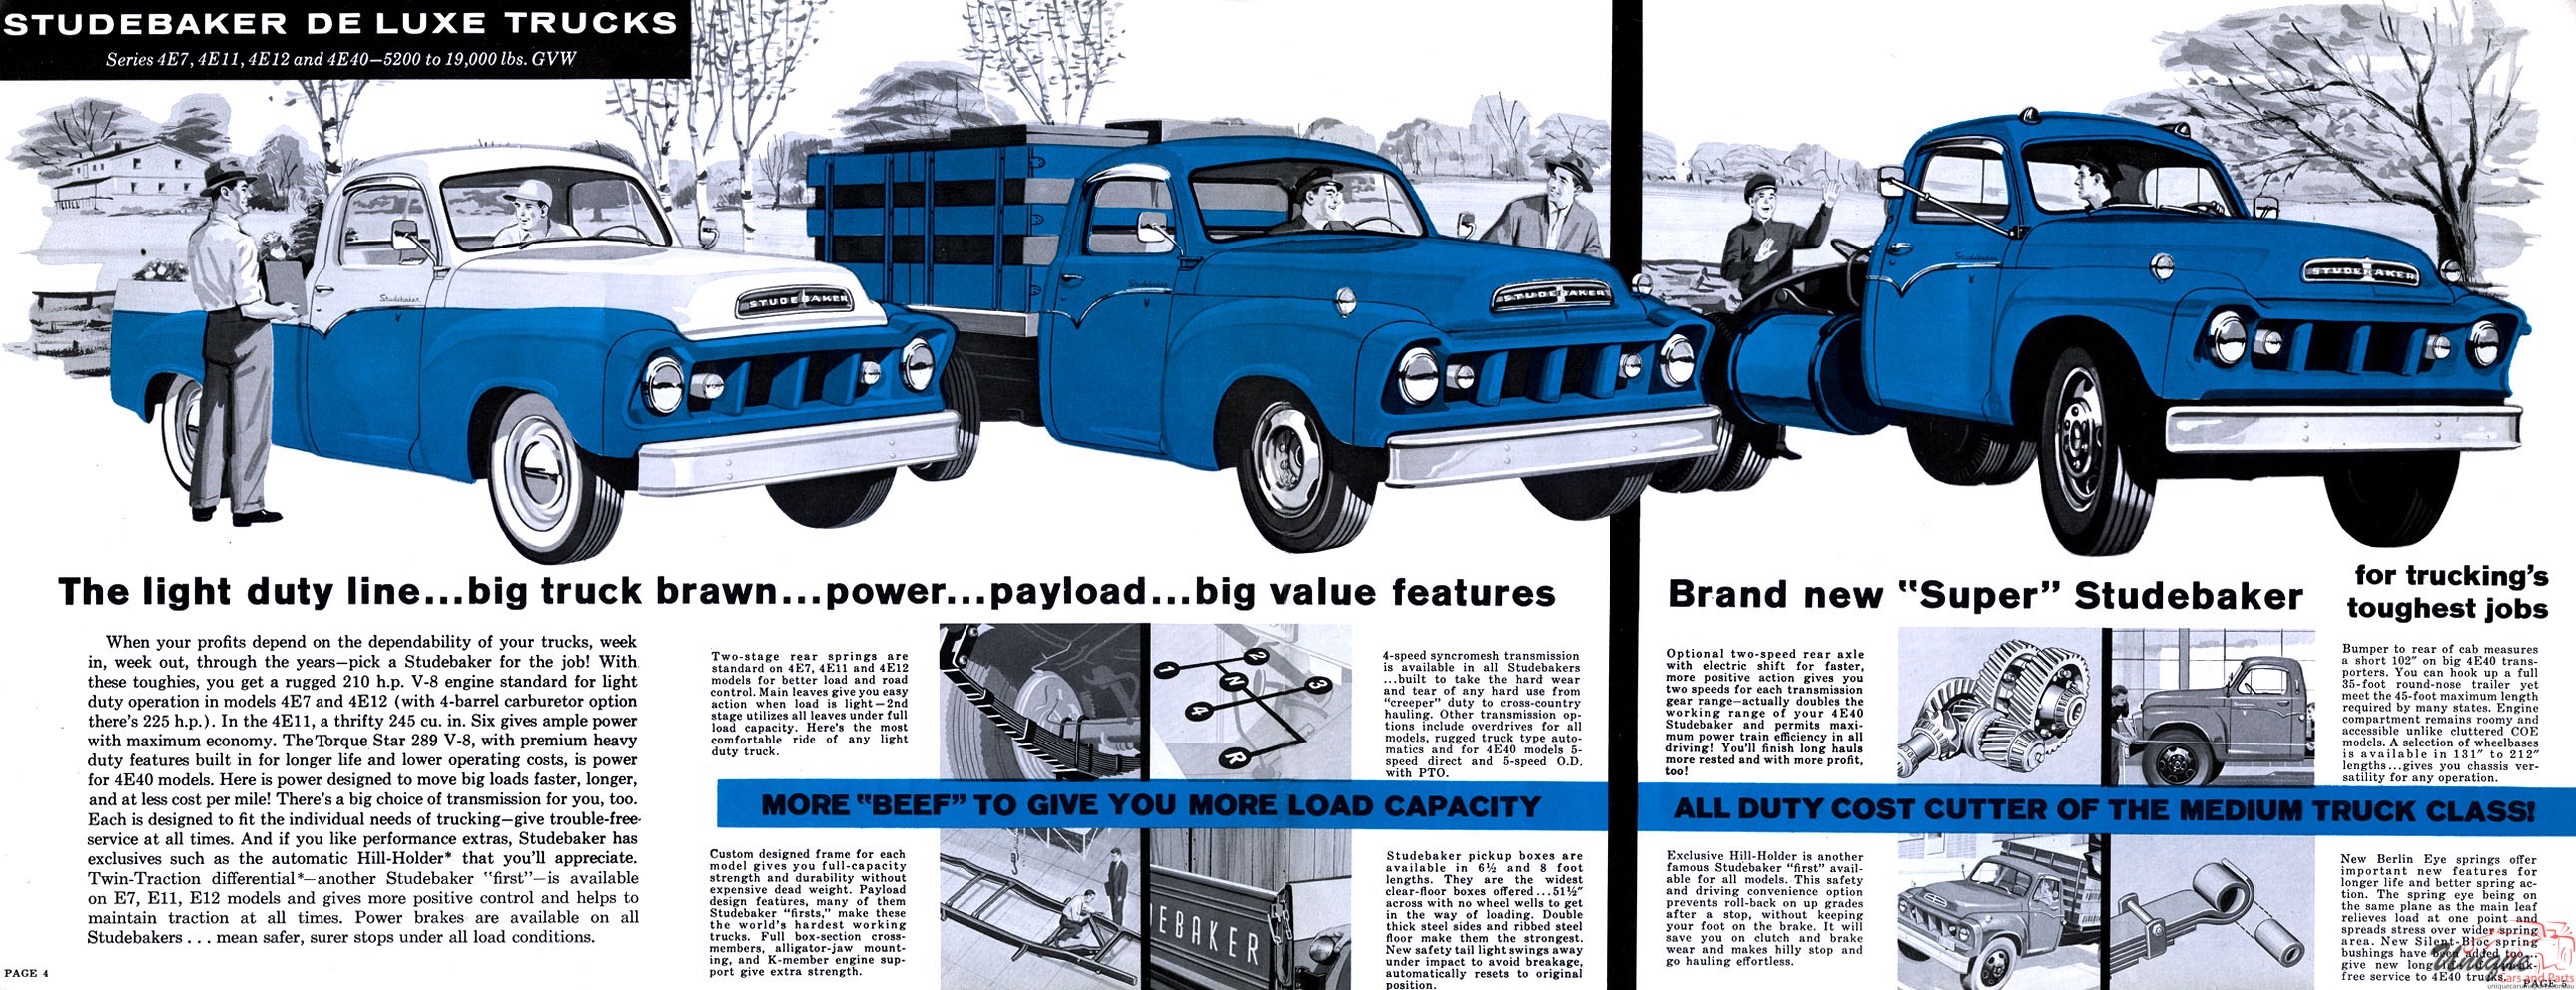 1959 Studebaker Trucks Brochure Page 7